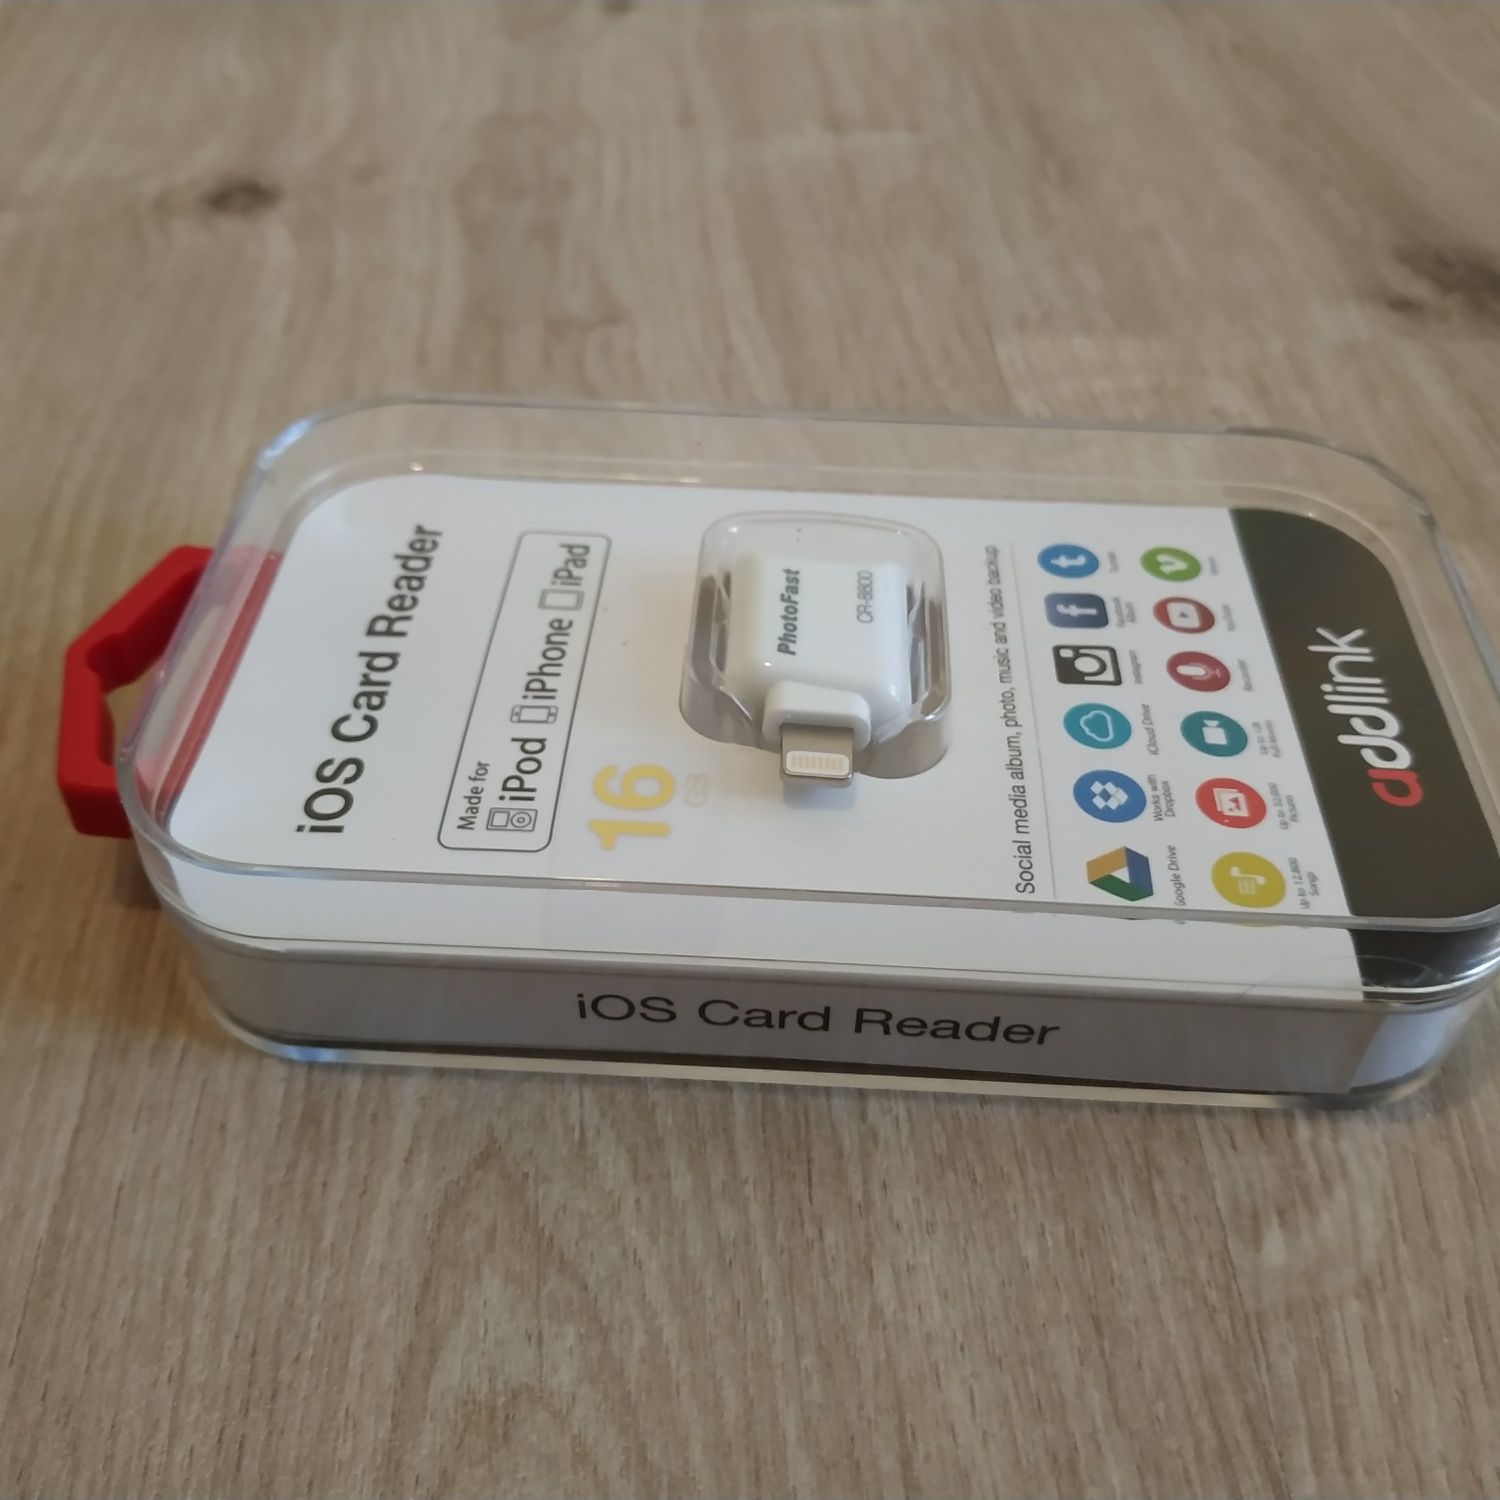 iOS card reader CR-8800 PhotoFast с 16GB. Увеличь память iPhone iPad